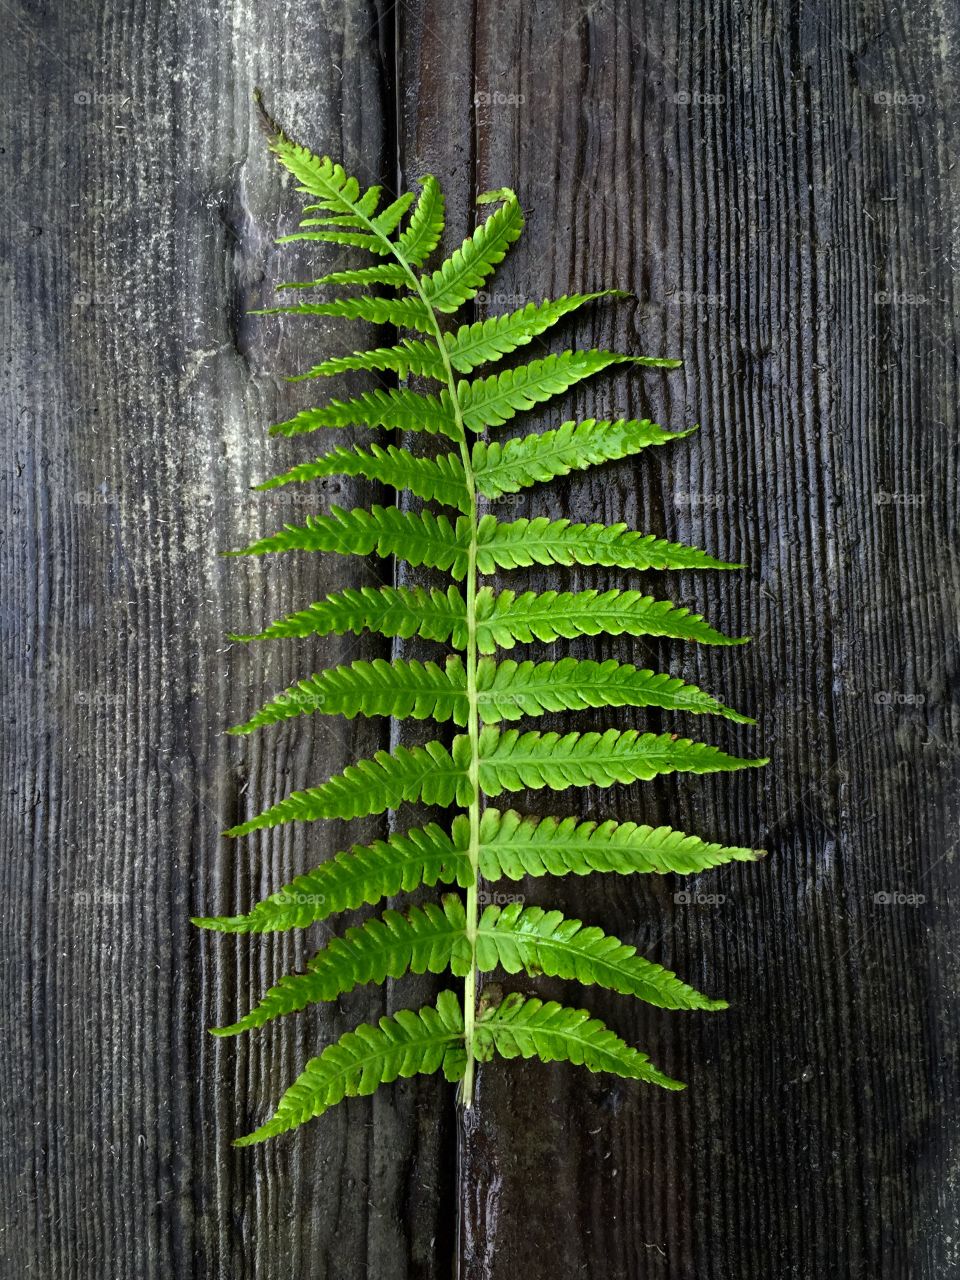 Fern leaf on wooden table